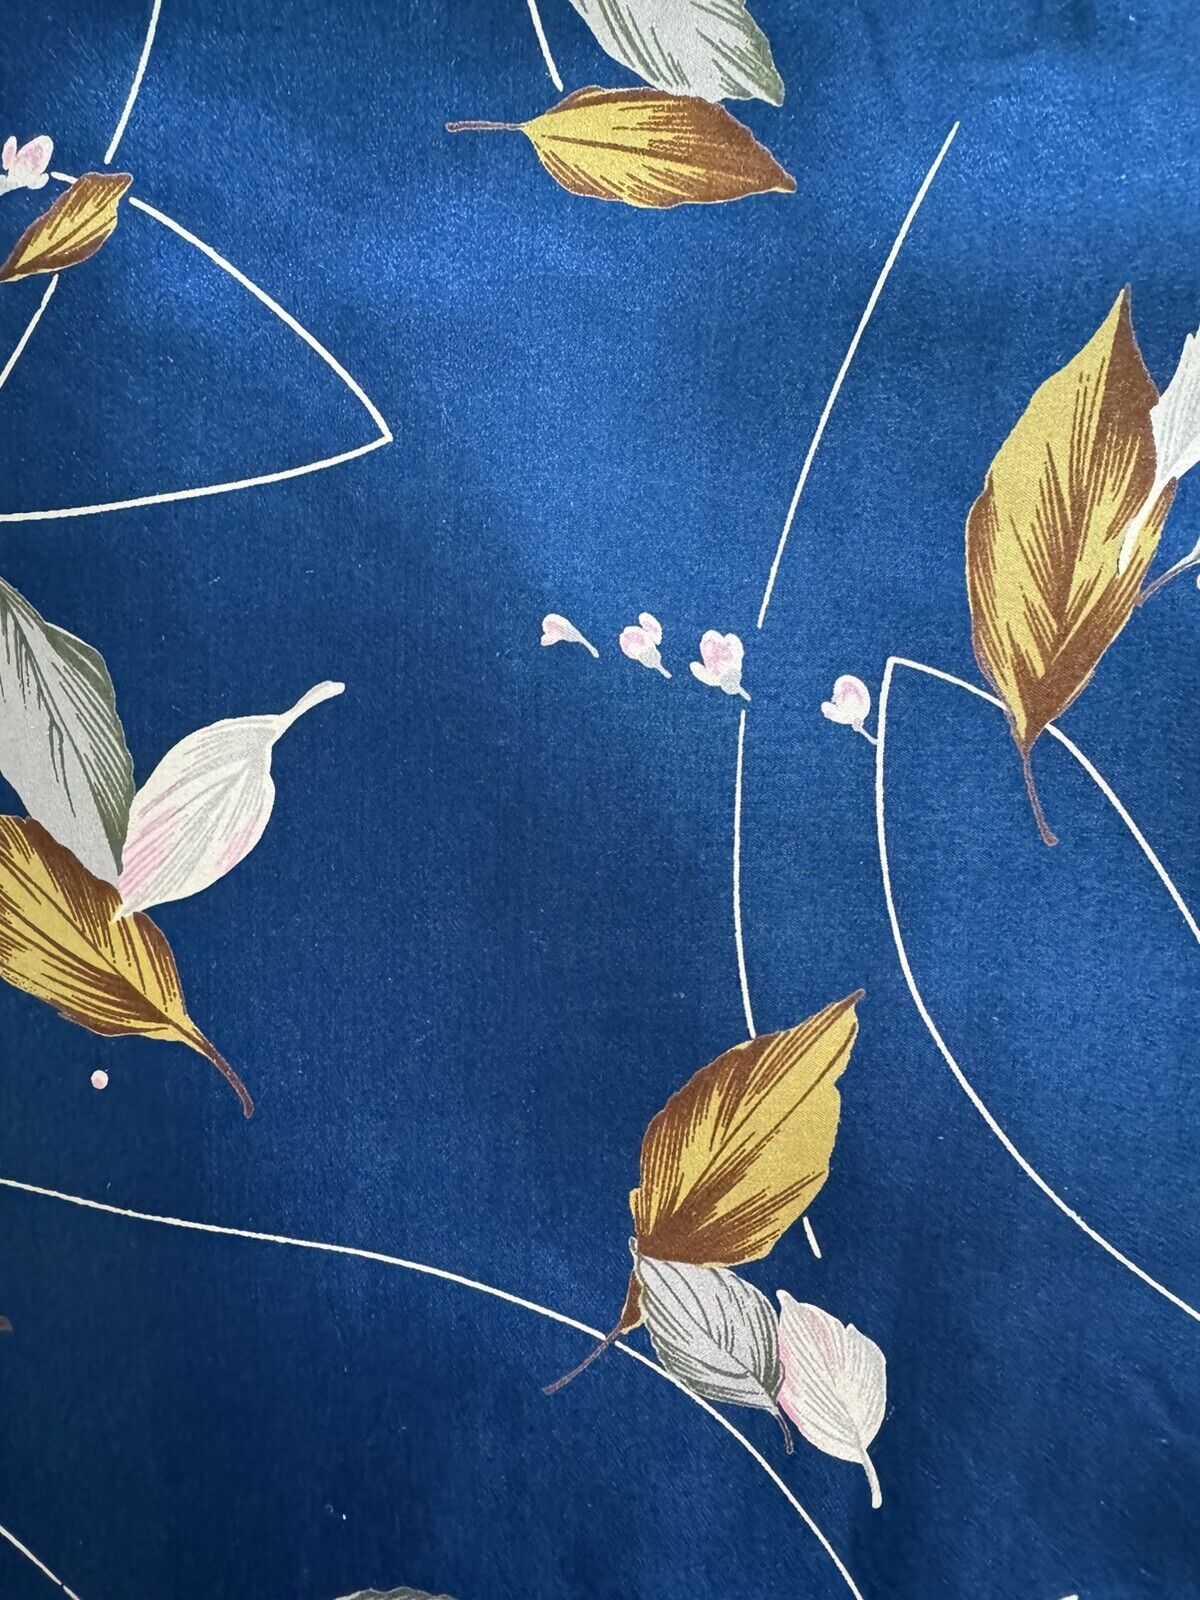 Chinese Screen Printed Silk Fabric 72x44 (2 yards) From Hong Kong Vintage